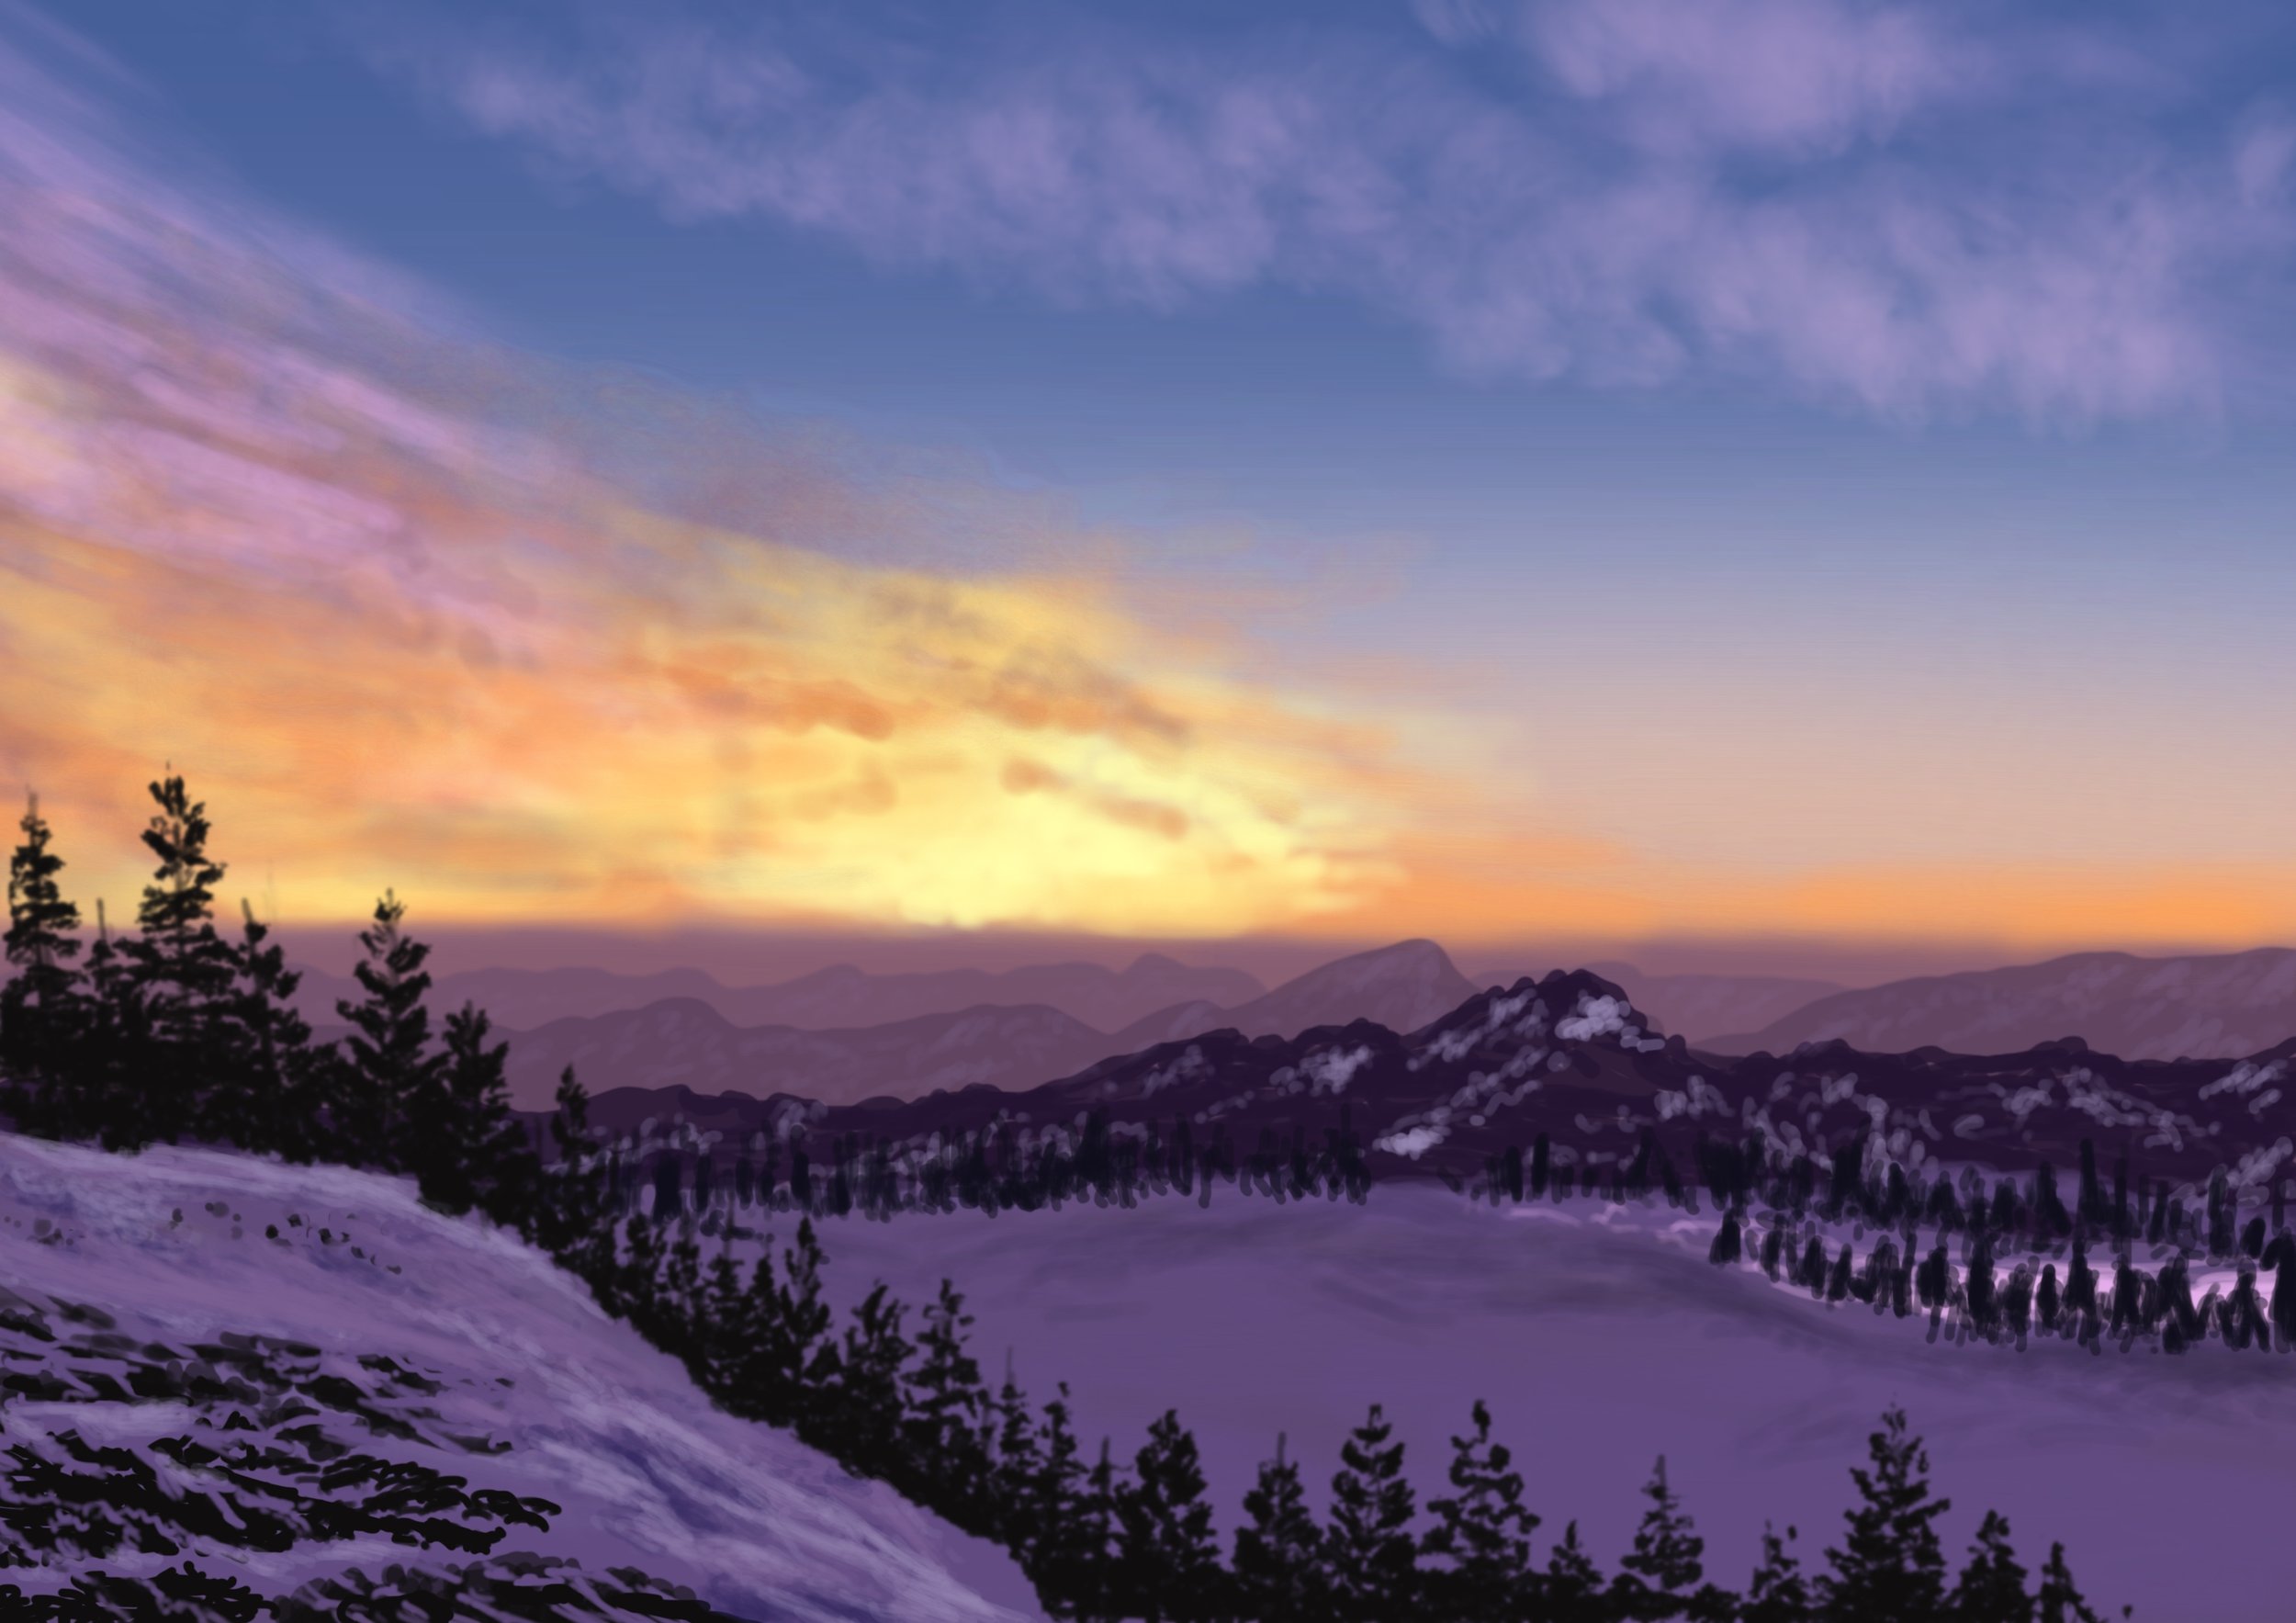 Snowy-Sunset-Mountains.jpg